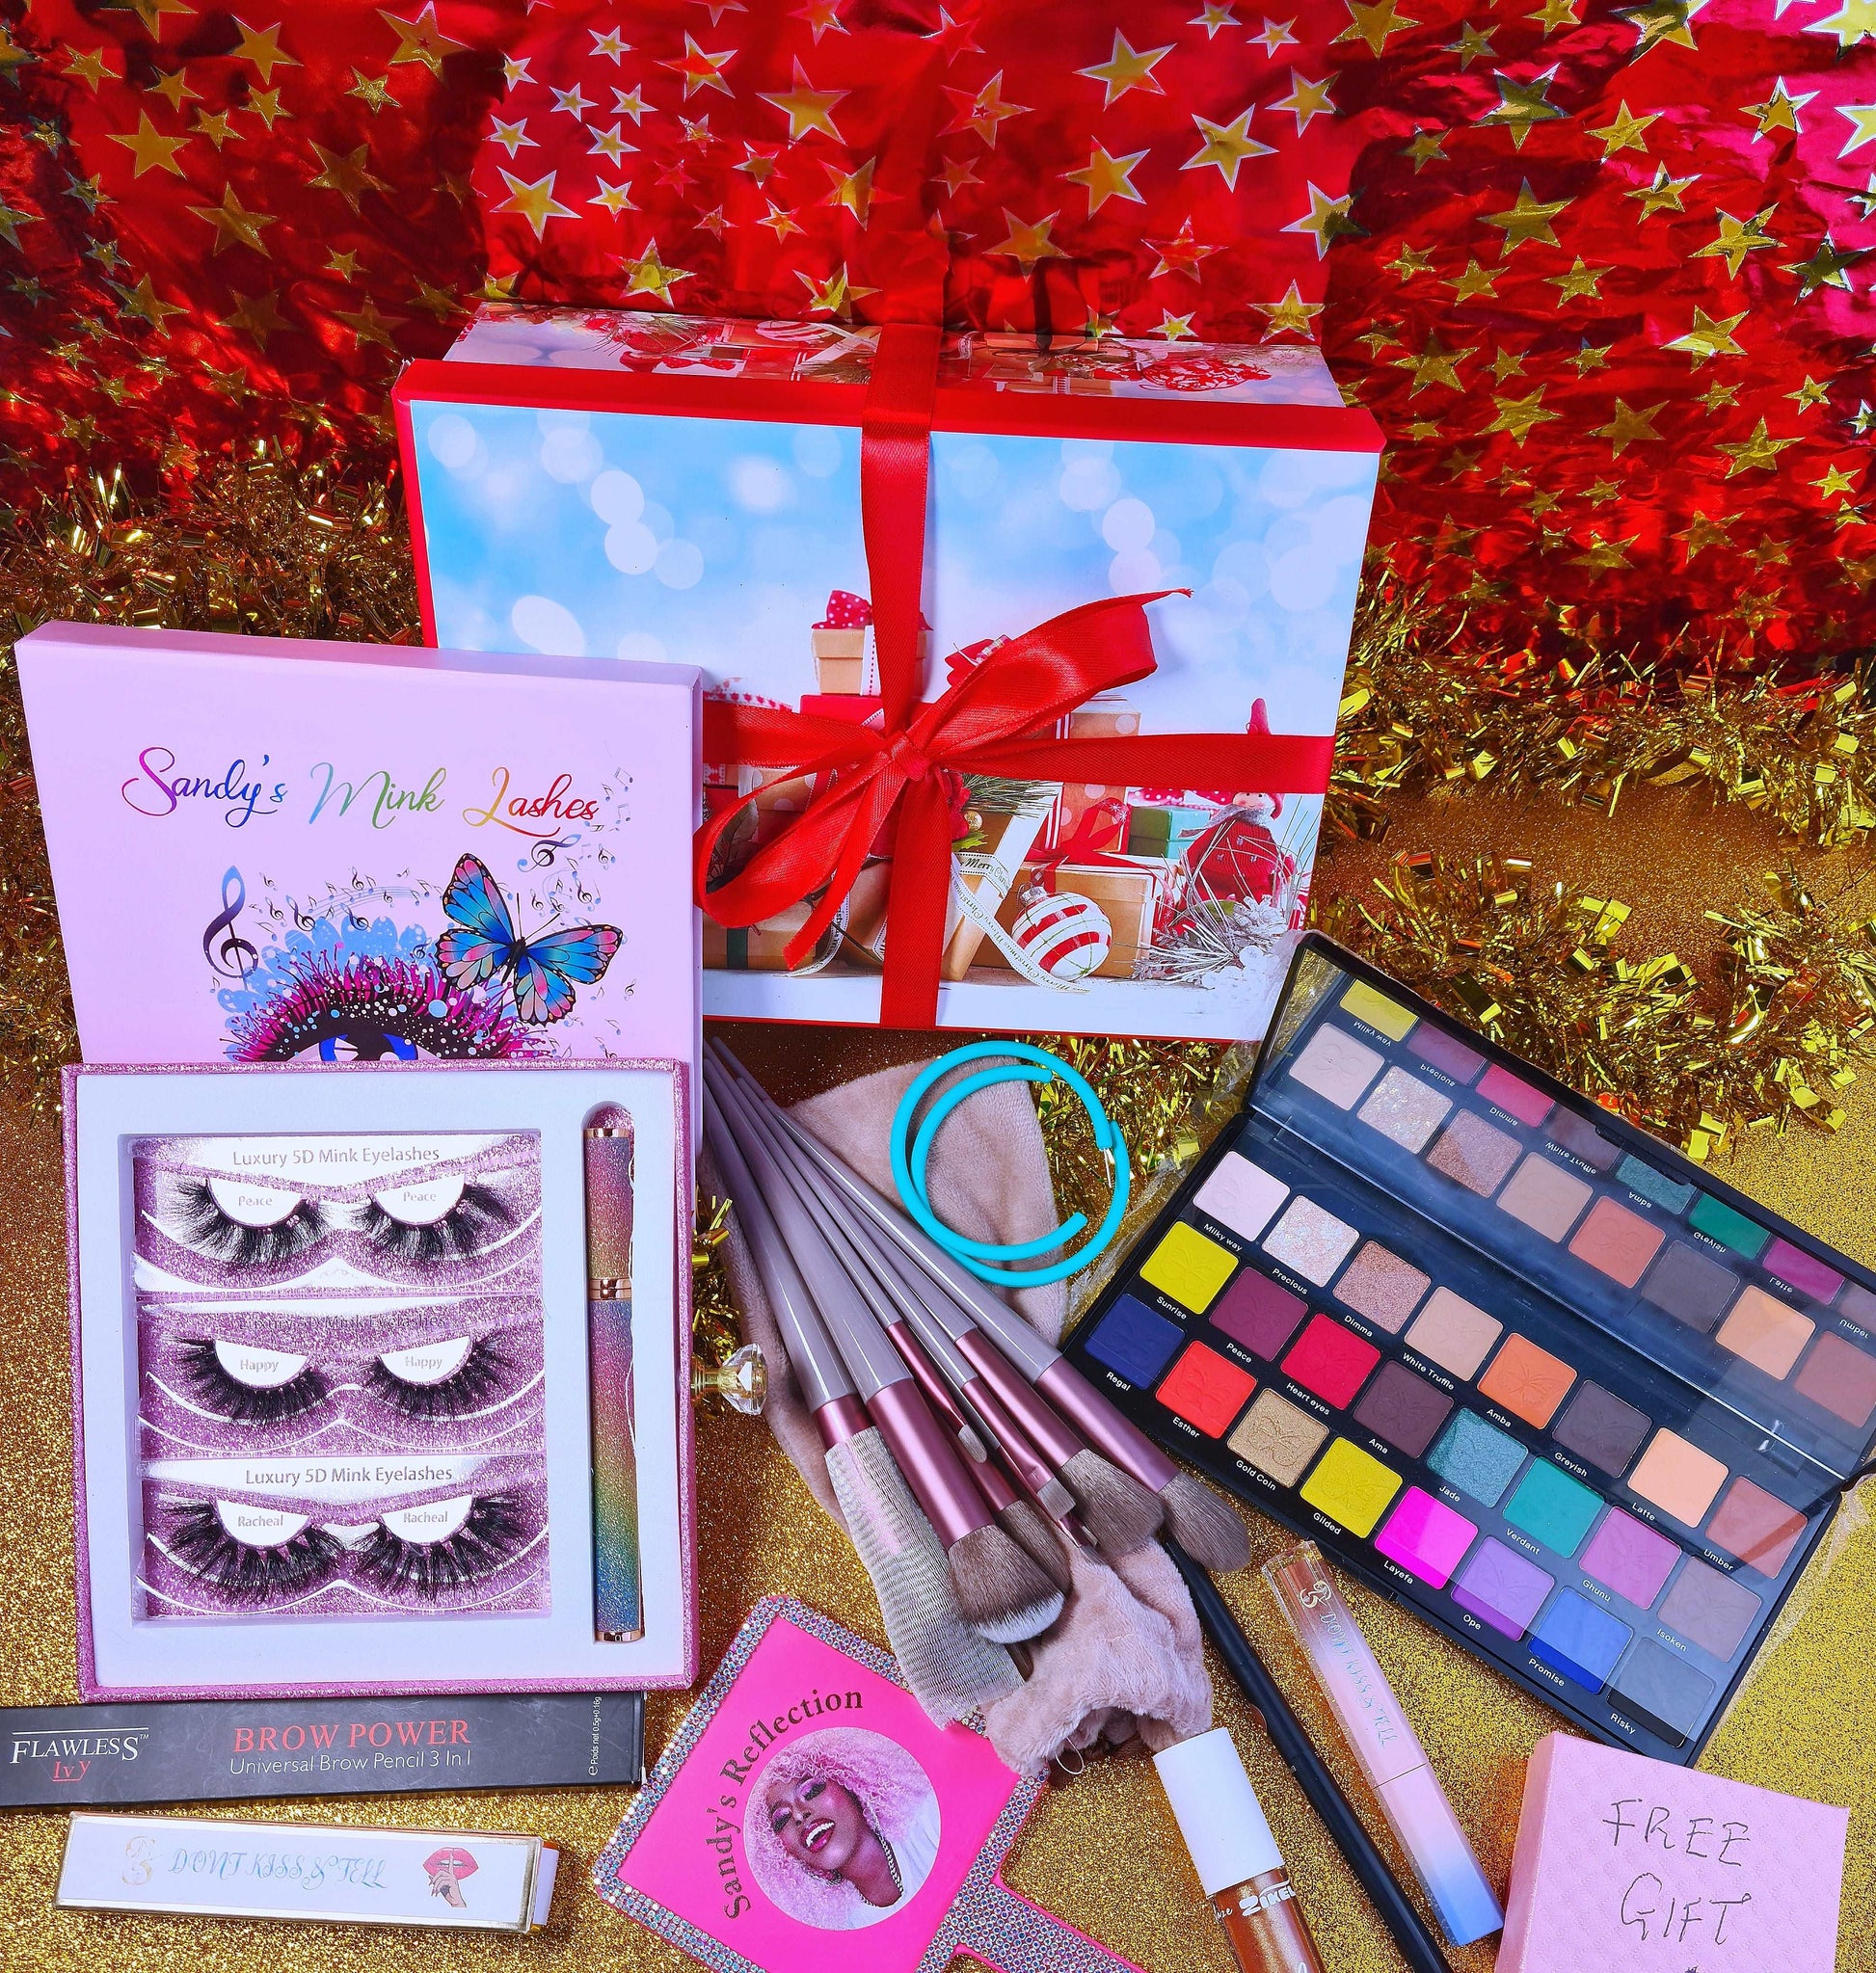 Christmas Golden Gift Box - Regalo di Natale Dorato - SANDY'S MAKEUP AND ARTISTRY 